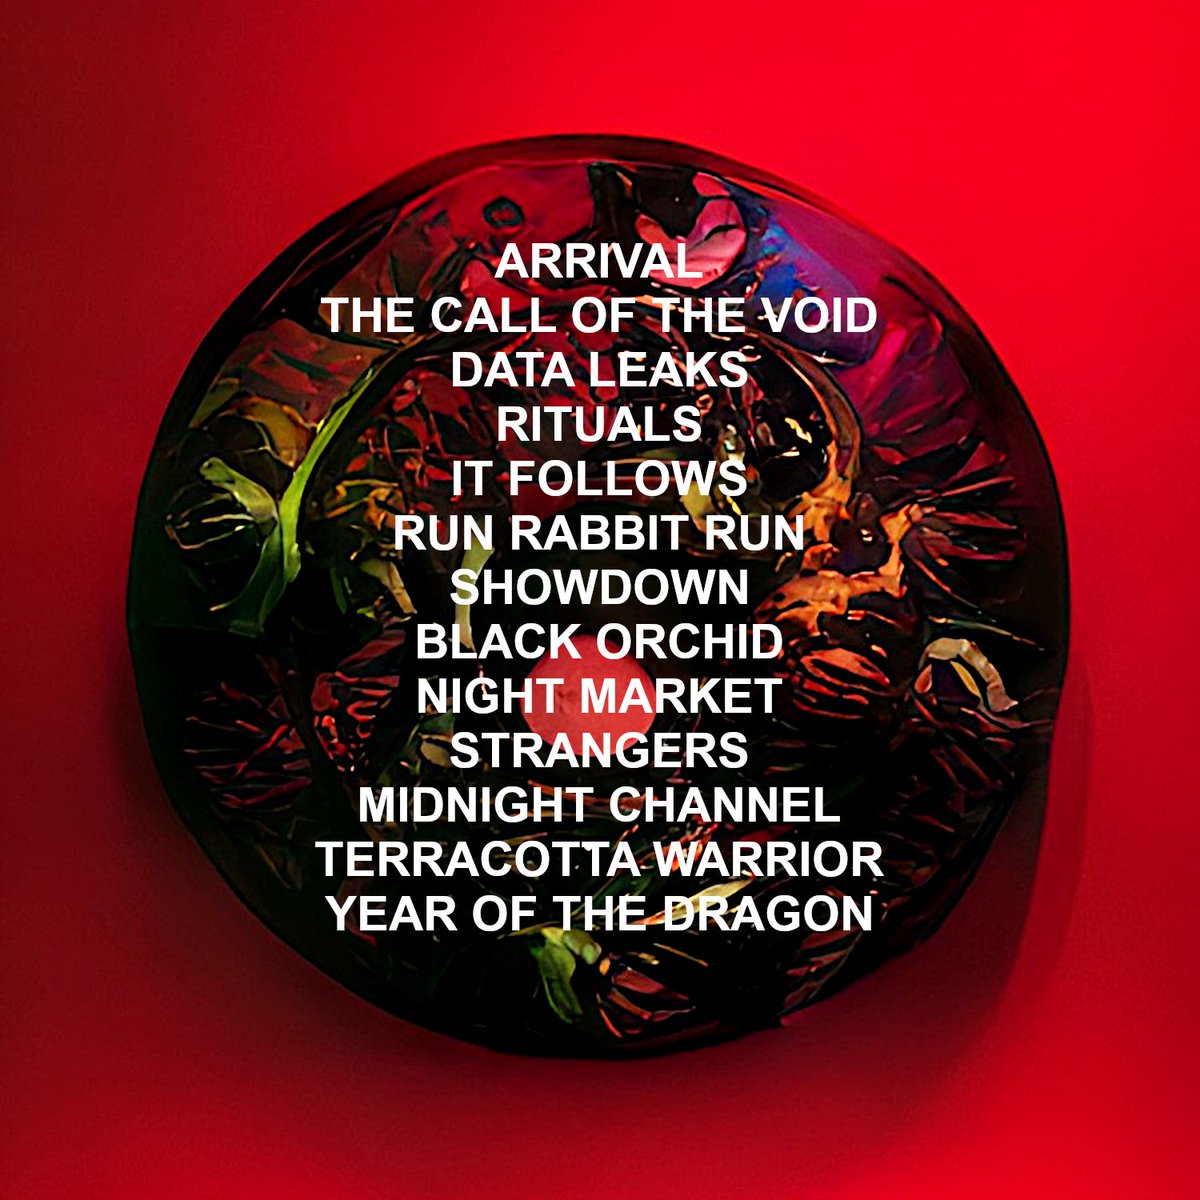 TERRACOTTA WARRIOR: Year of the Dragon Edition - out 10.2.24.
.
#synthwave #cyberpunk #chillwave #vaporwaveaesthetic #vaporwave #dancepunk #electrohouse #frenchhouse #80s #90s #soundtrack #synthpop #retro #hiphop #breakbeat #lofi #chinesenewyear #yearoftherabbit #yearofthedragon